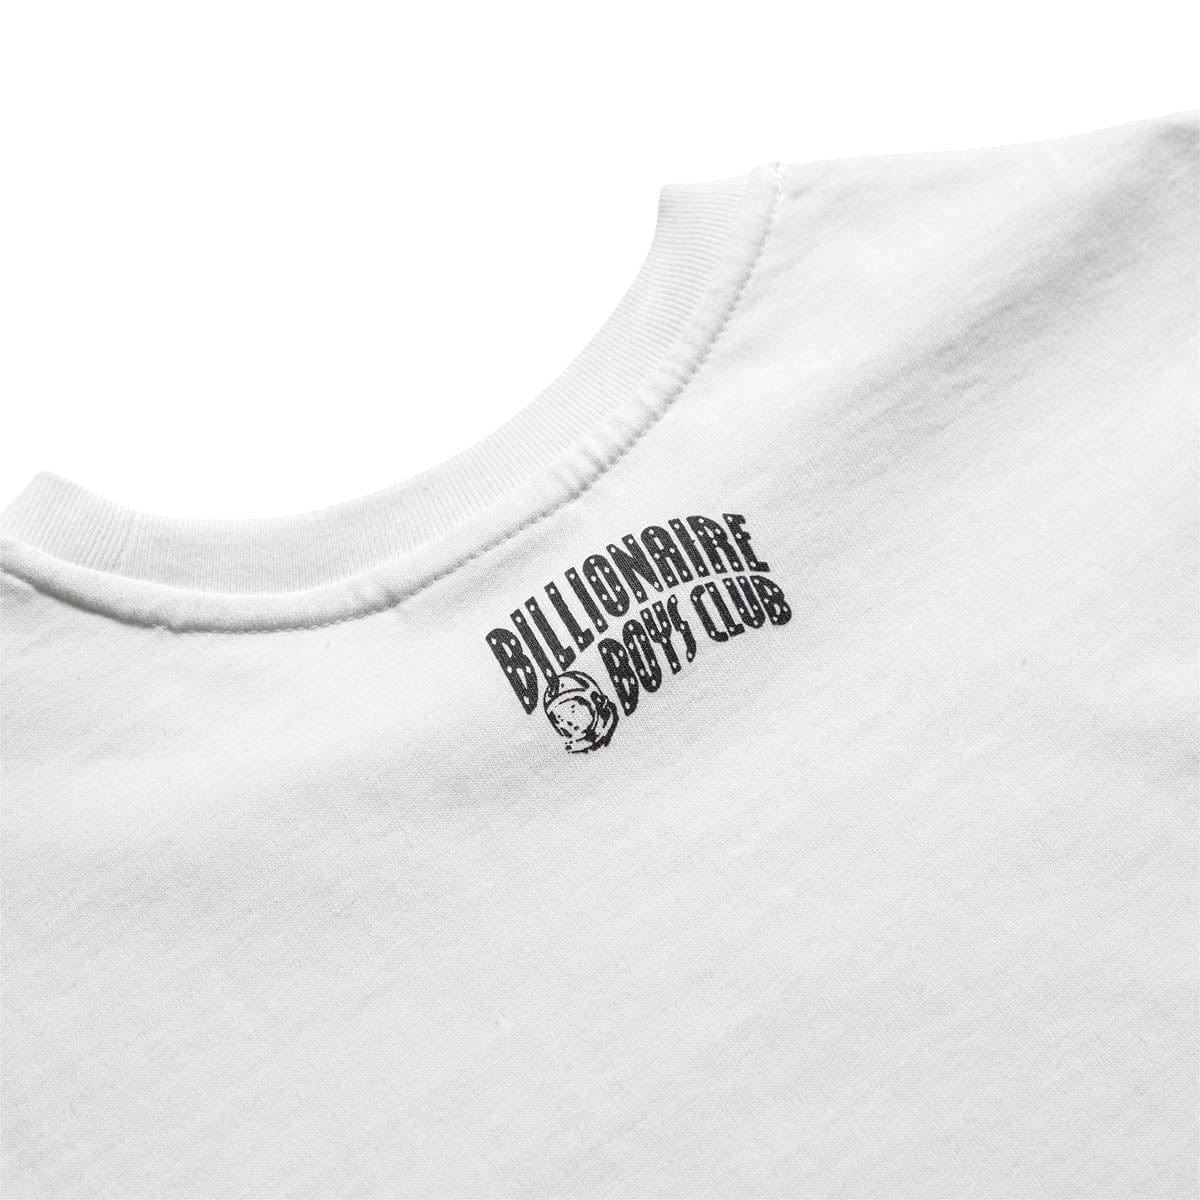 Billionaire Boys Club T-Shirts BB DRIP S/S TEE